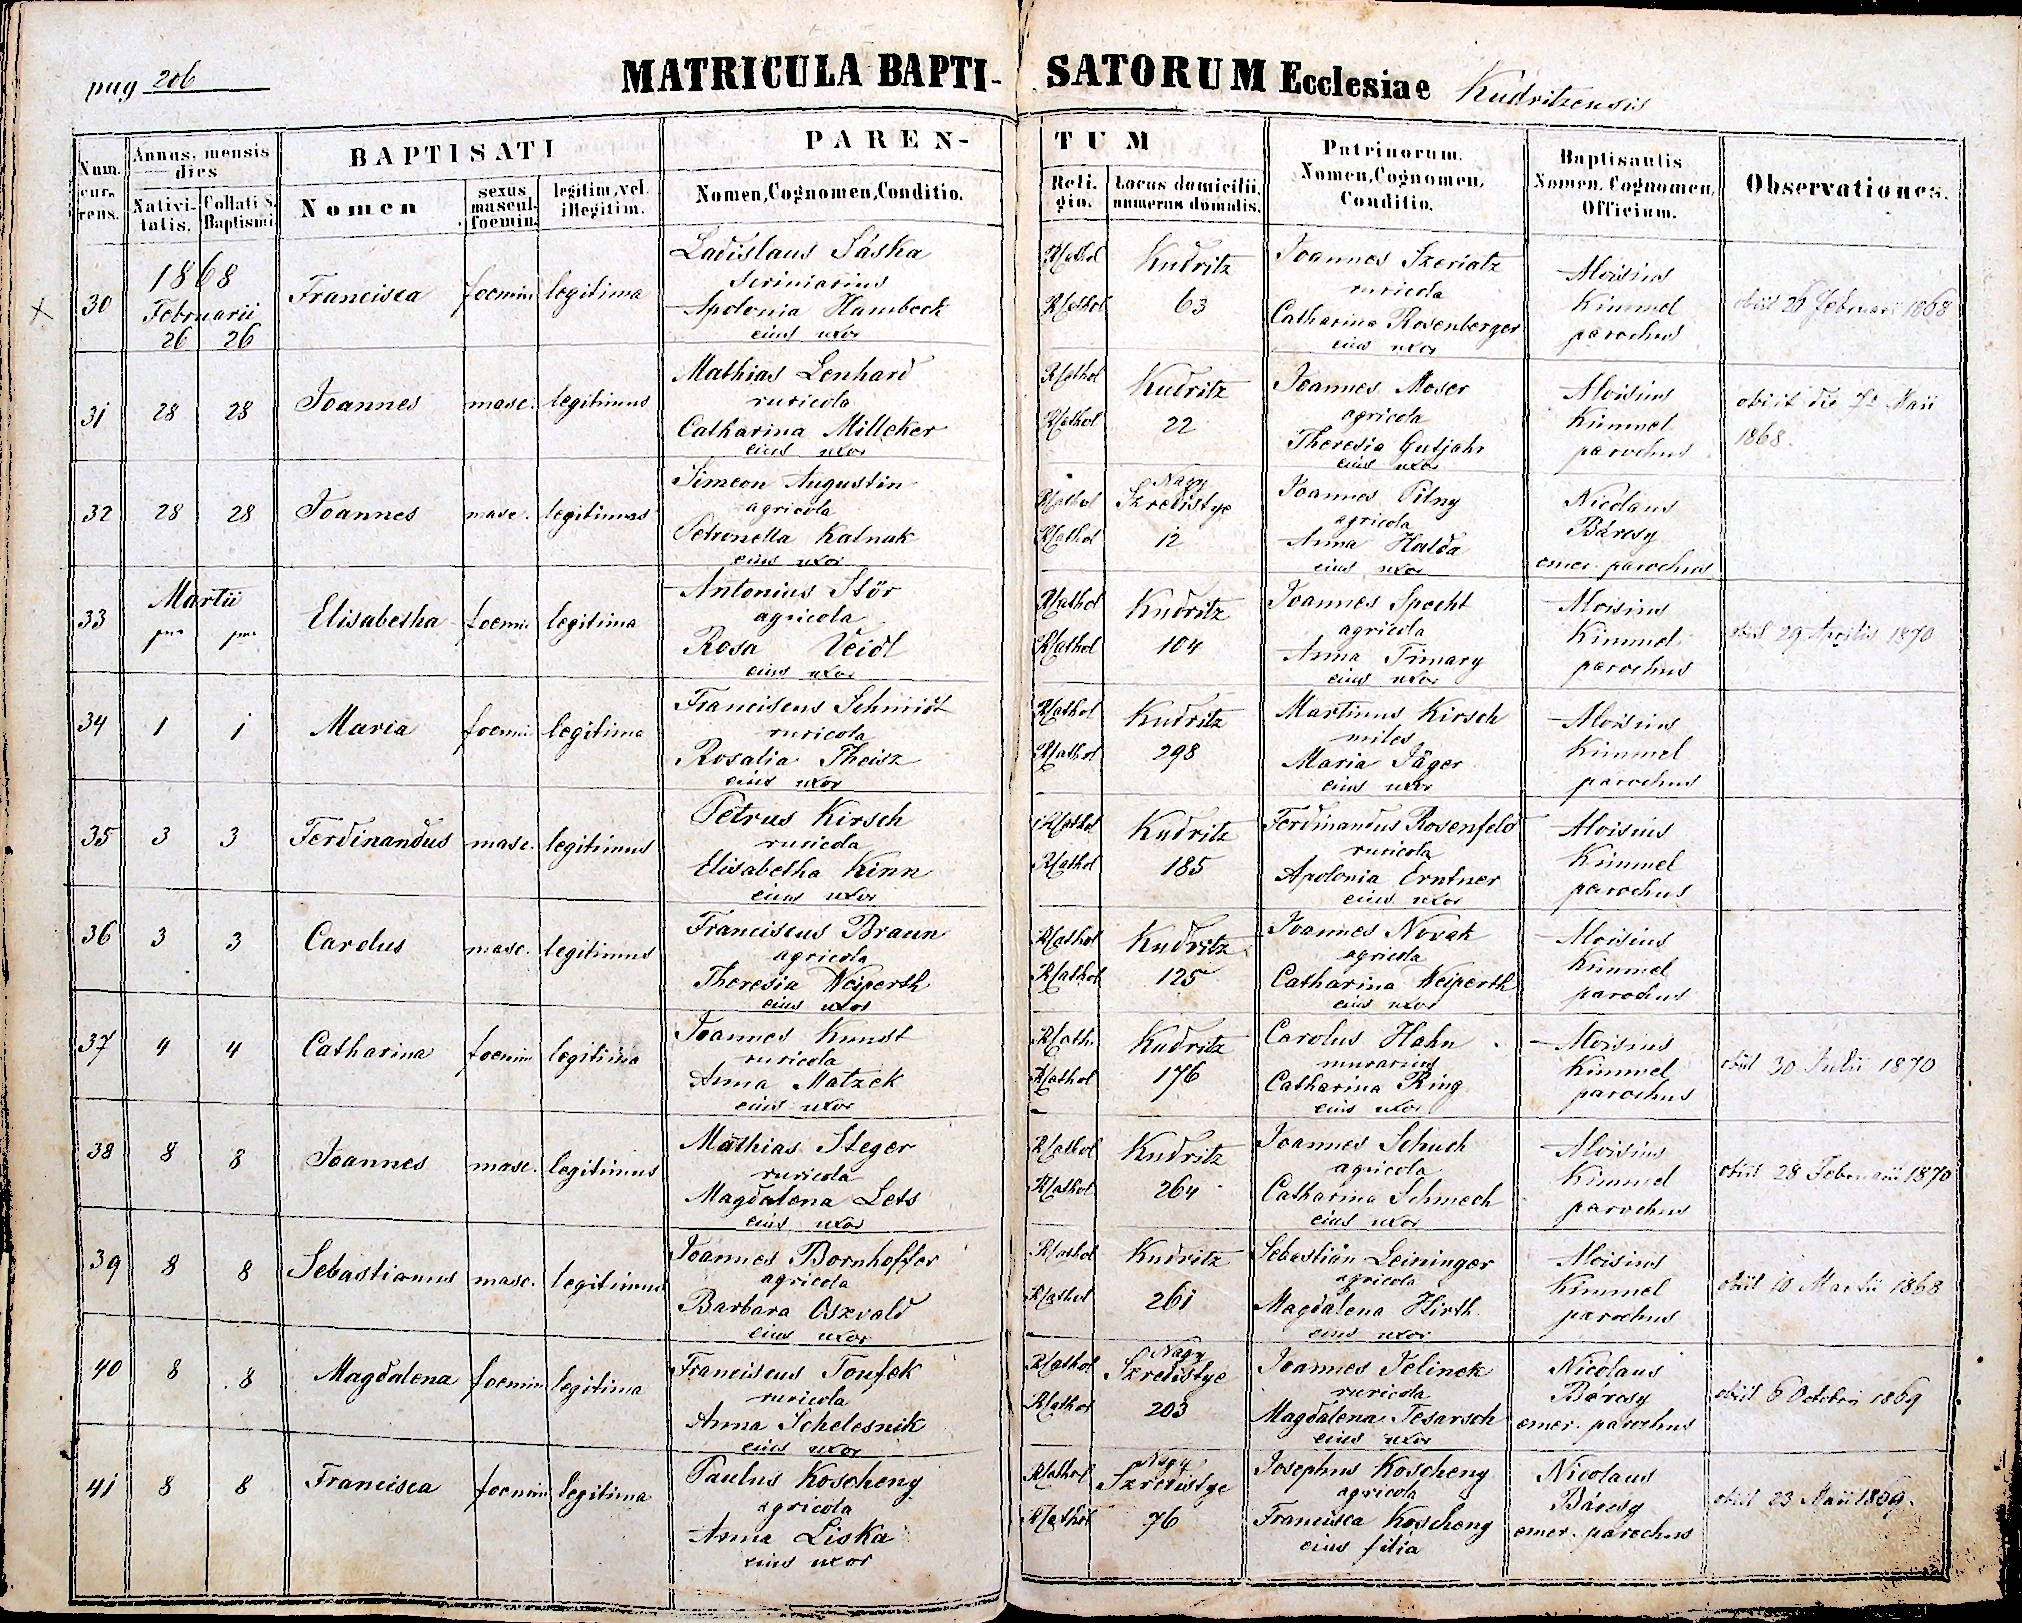 images/church_records/BIRTHS/1852-1870B/206